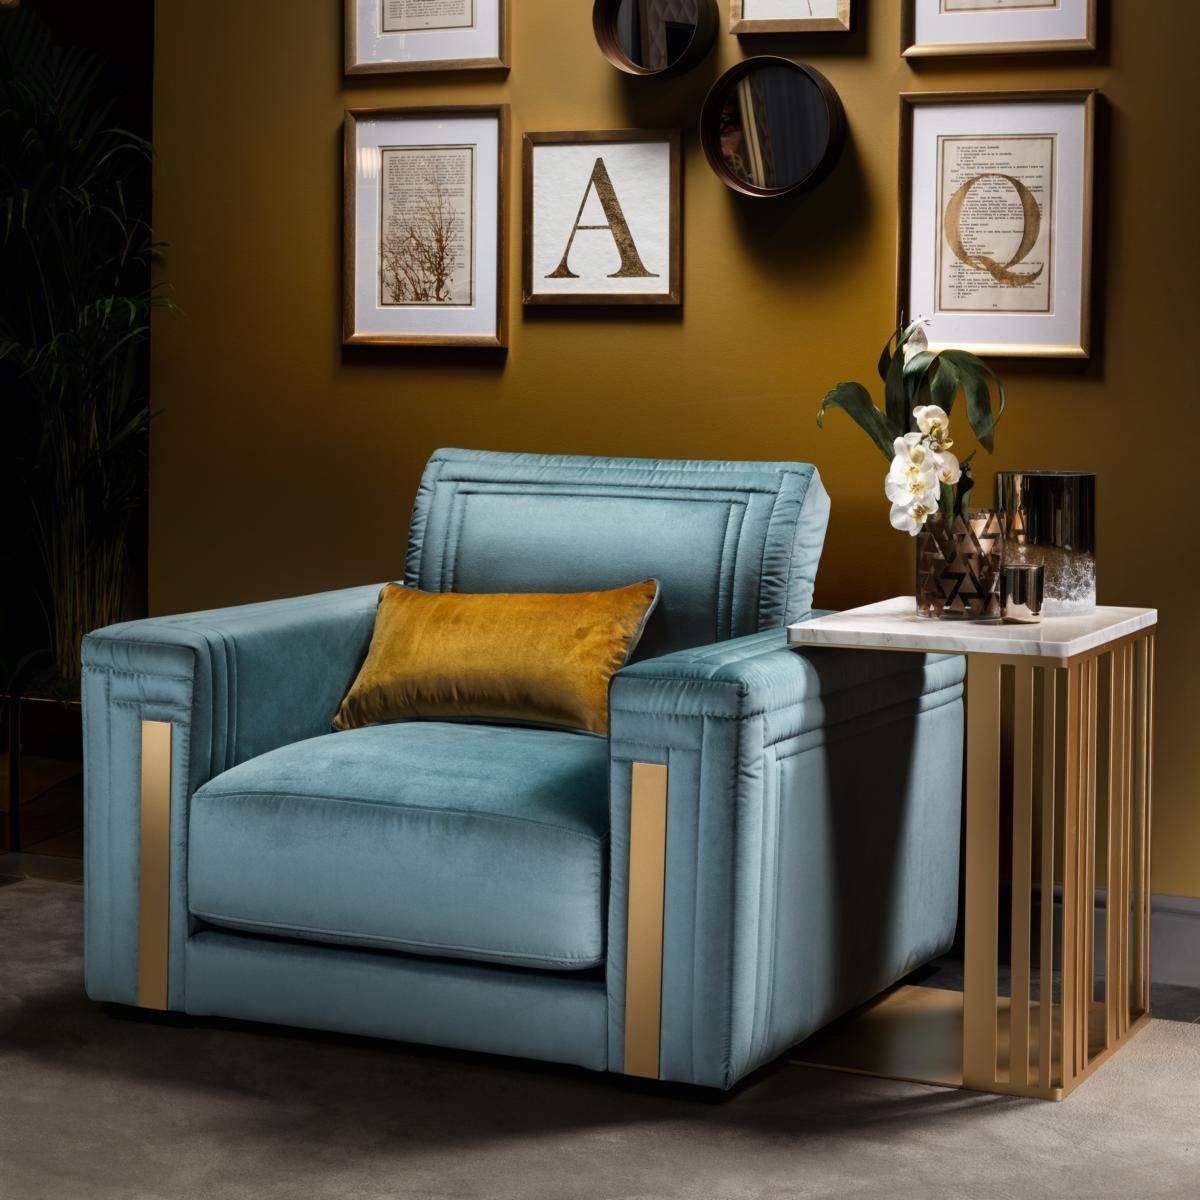 JVmoebel Sessel Sessel Club Lounge Design Lehn Stuhl Polster Sofa Fernseh Blau arredoclassic